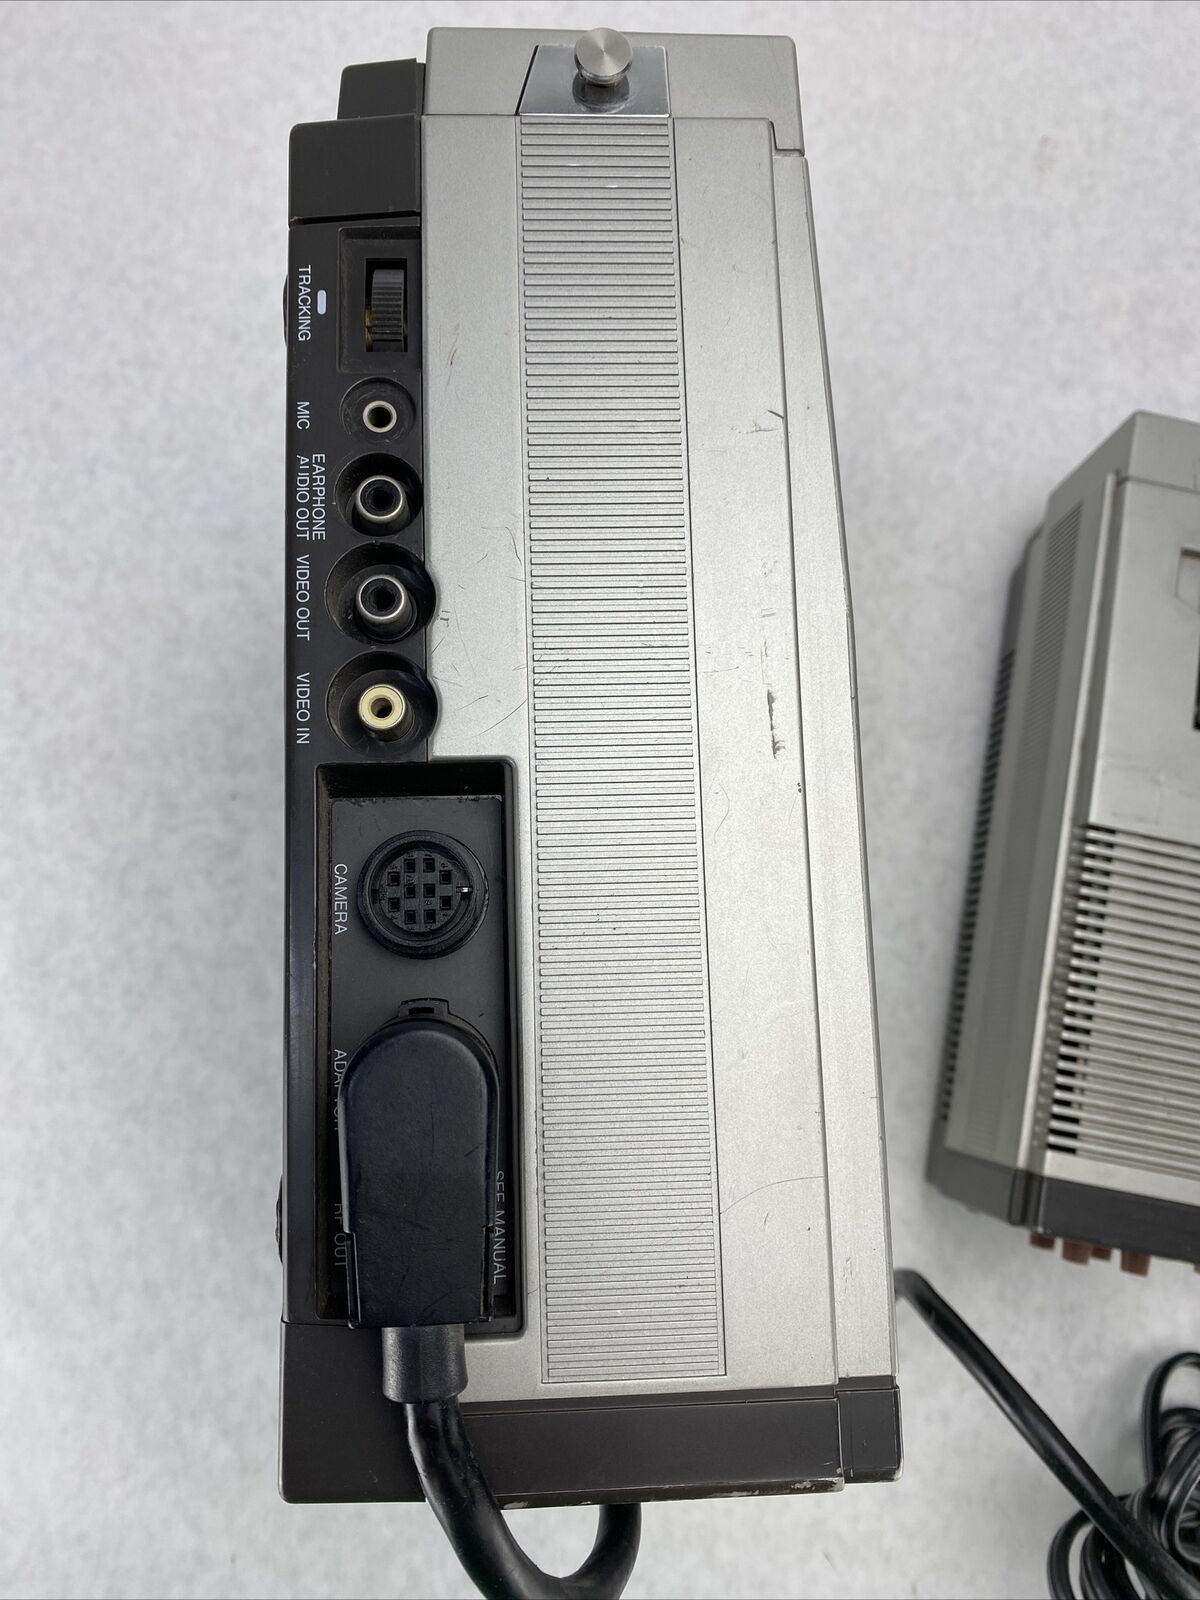 Panasonic PV-A500 TV Tuner + PV-5000 Video VHS Recorder VCR Combo NEEDS REPAIR